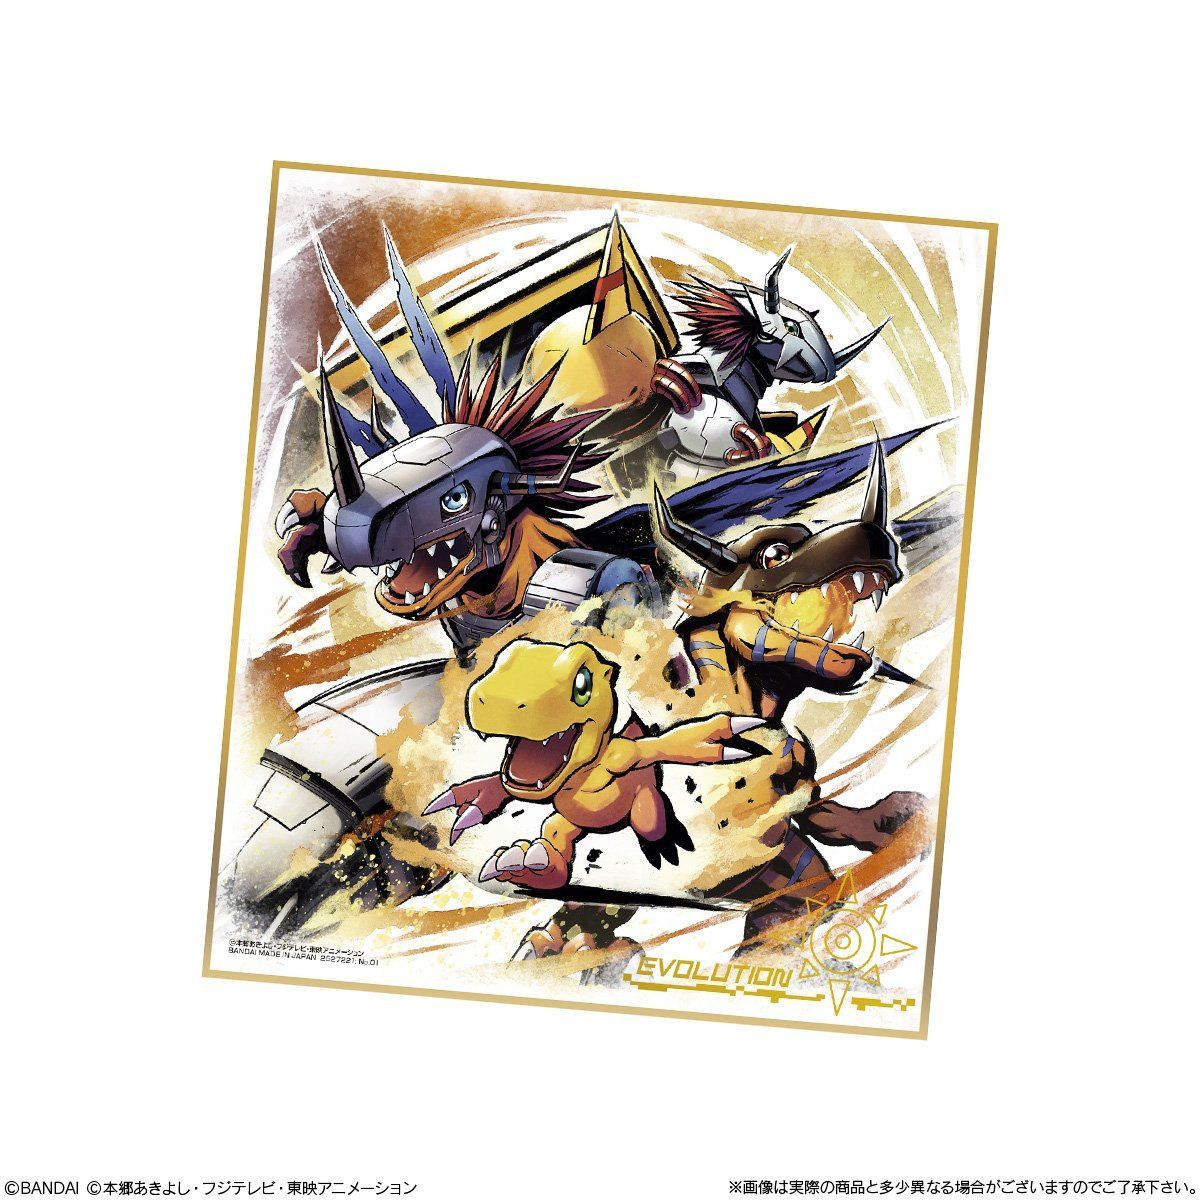 AIRMAIL TO USA OKAY Bandai Japan Digimon Adventure NEW Shikishi Paper Art 